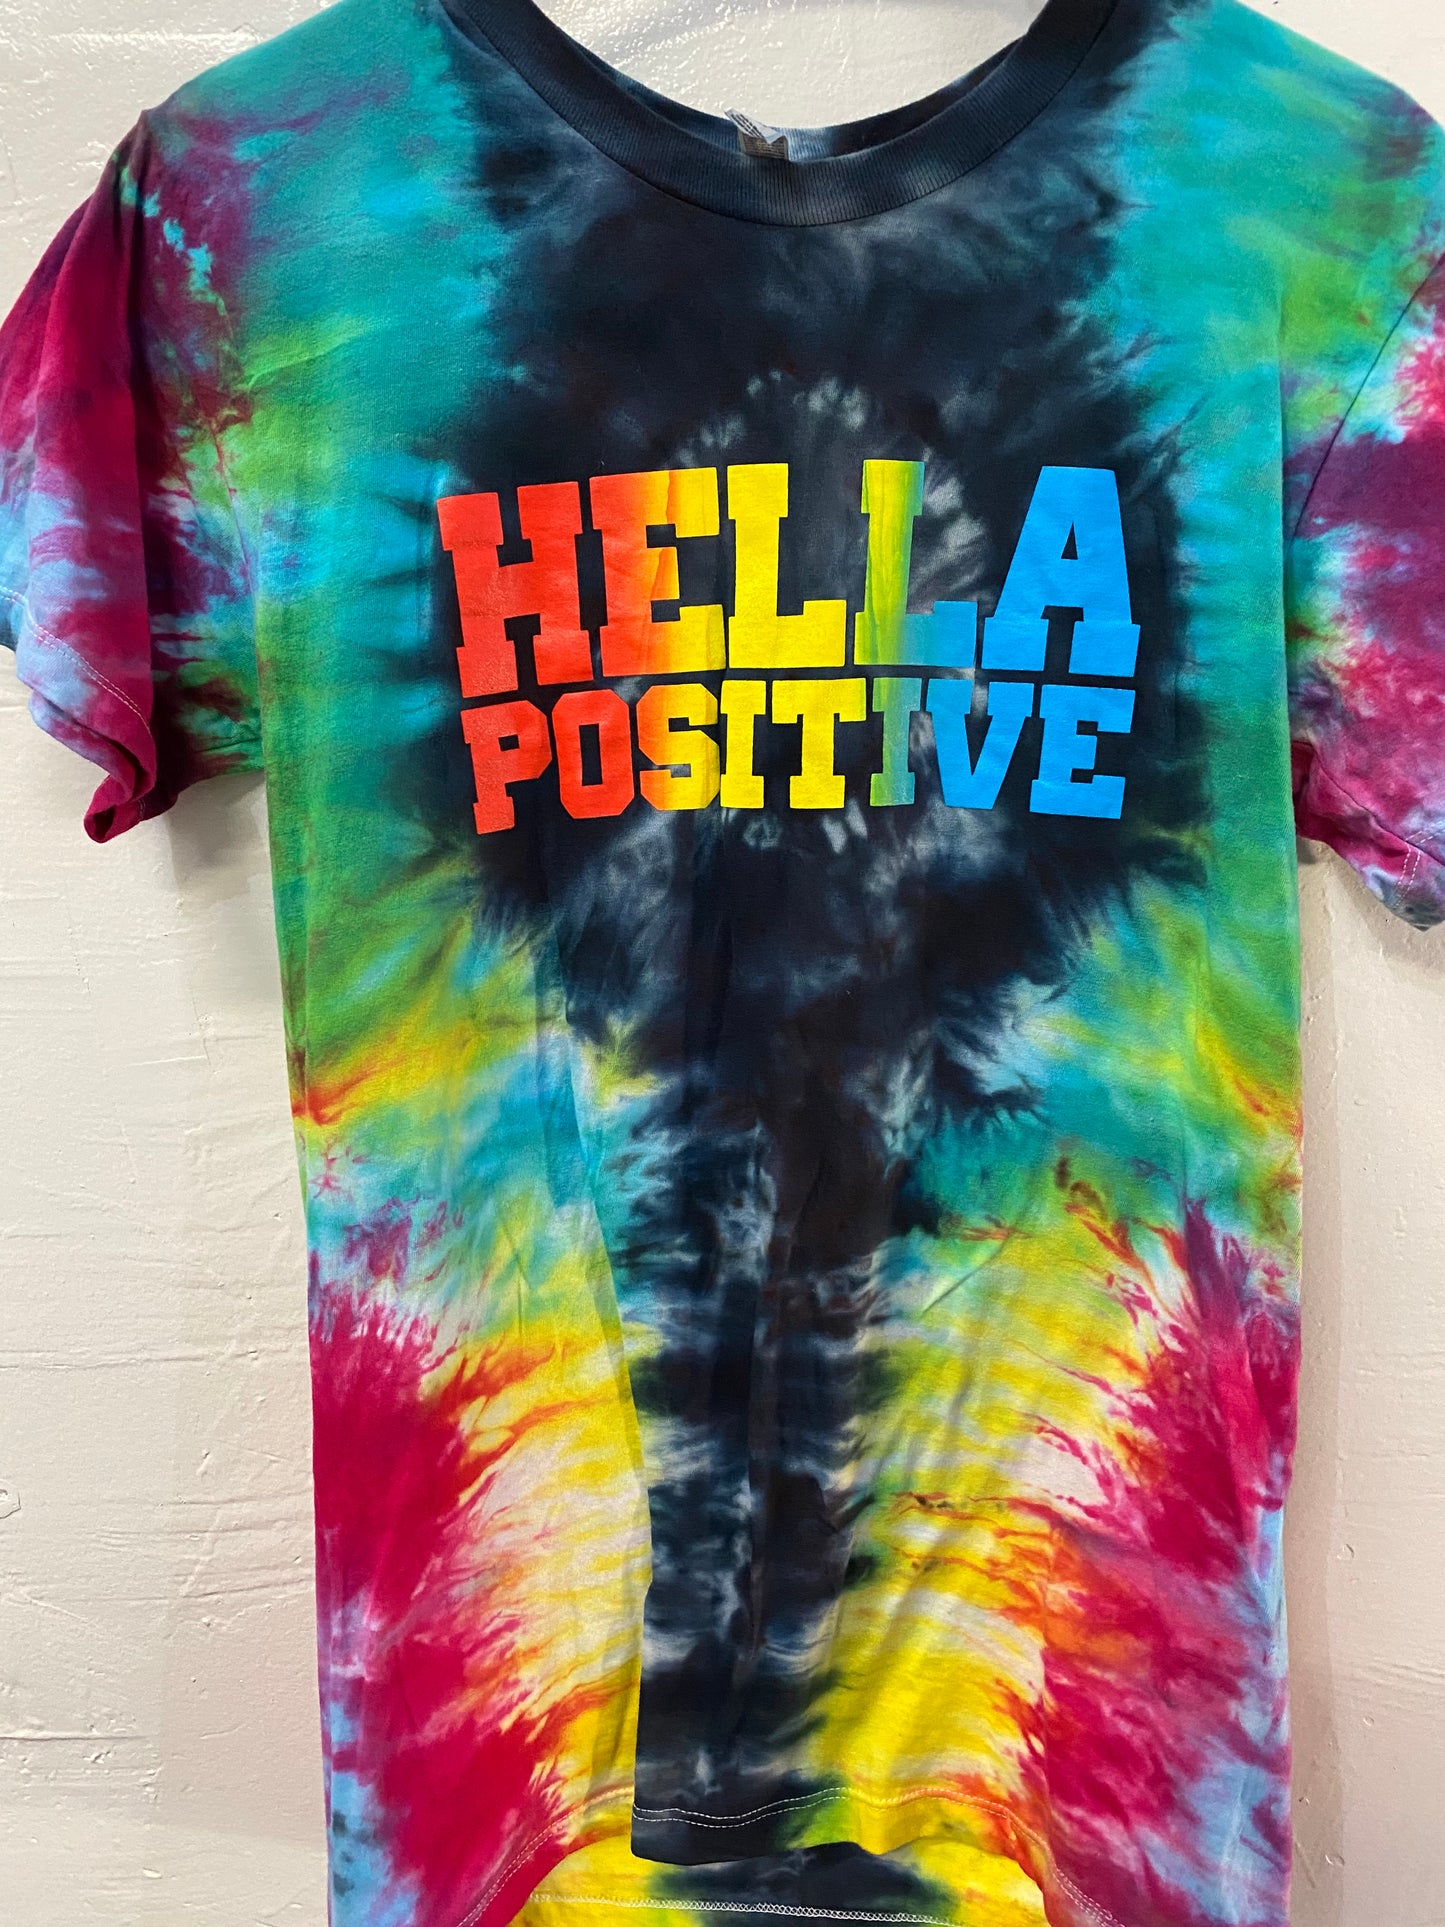 Hella Positive Tie Dye T-Shirt - Large